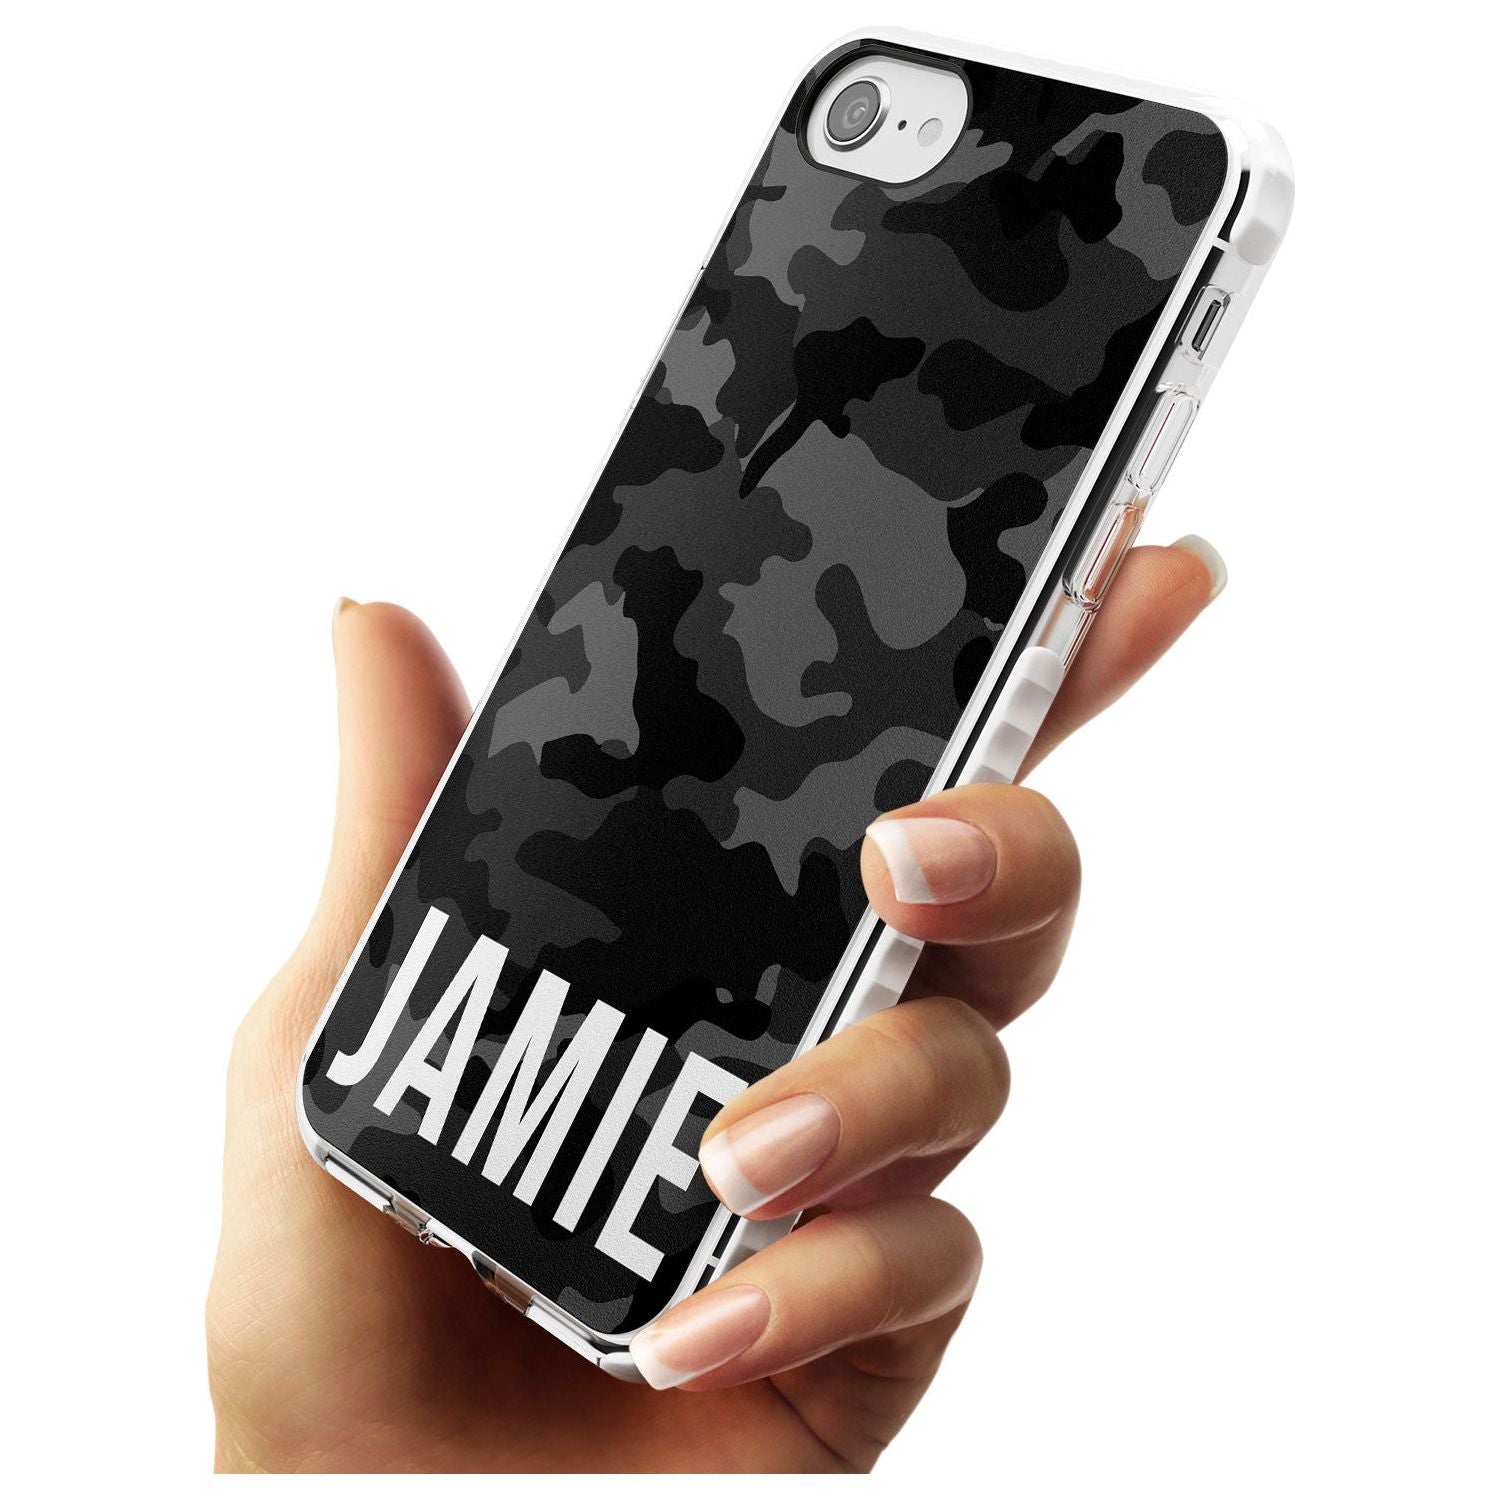 Horizontal Name Personalised Black Camouflage Impact Phone Case for iPhone SE 8 7 Plus